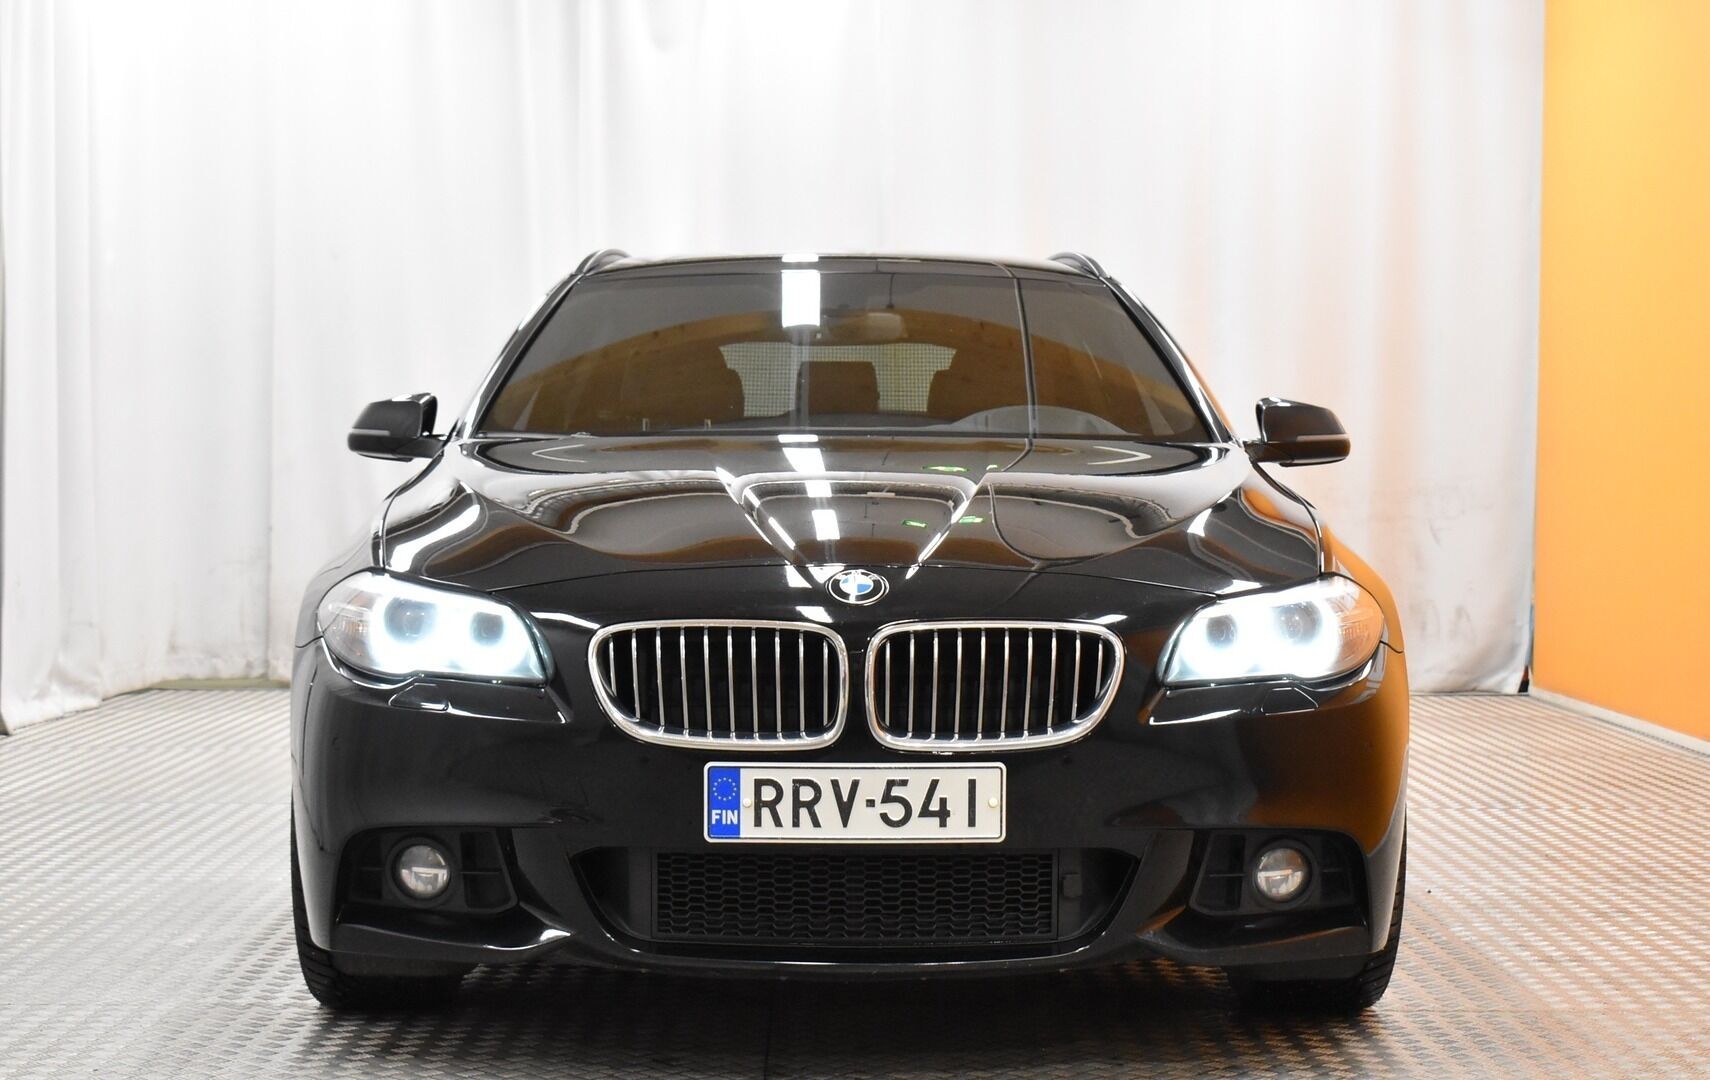 Musta Farmari, BMW 530 – RRV-541